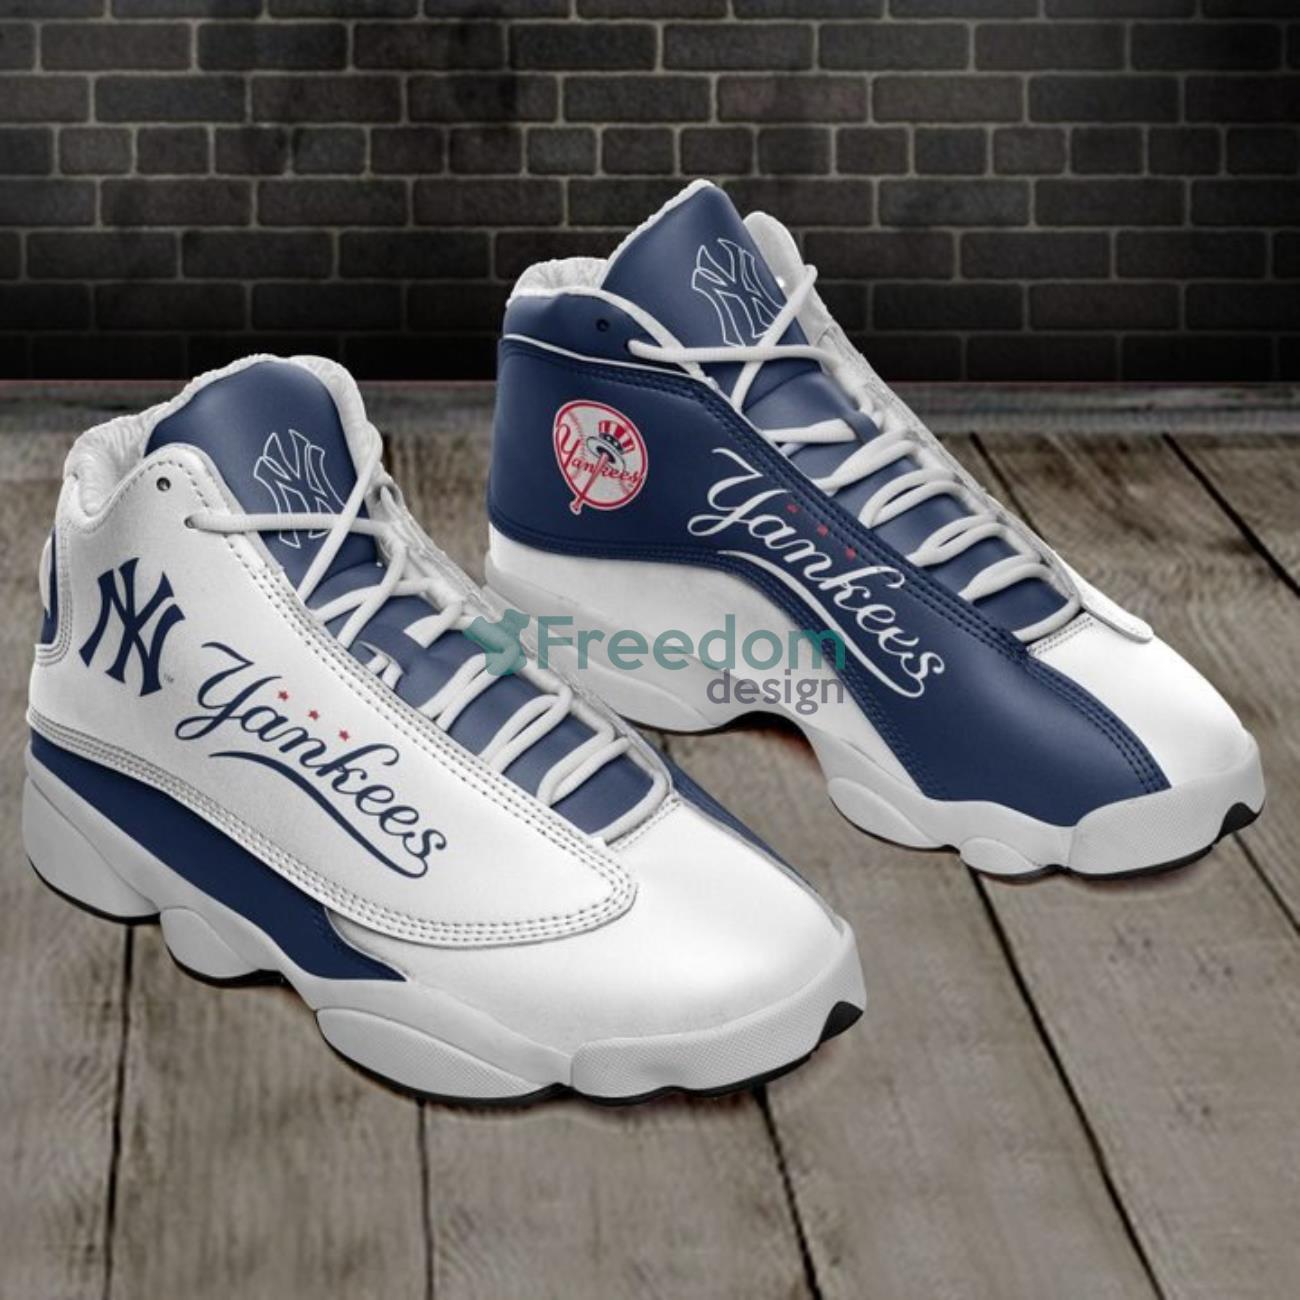 New York Yankees Team Air Jordan 13 Sneaker Shoes Gift For Fans